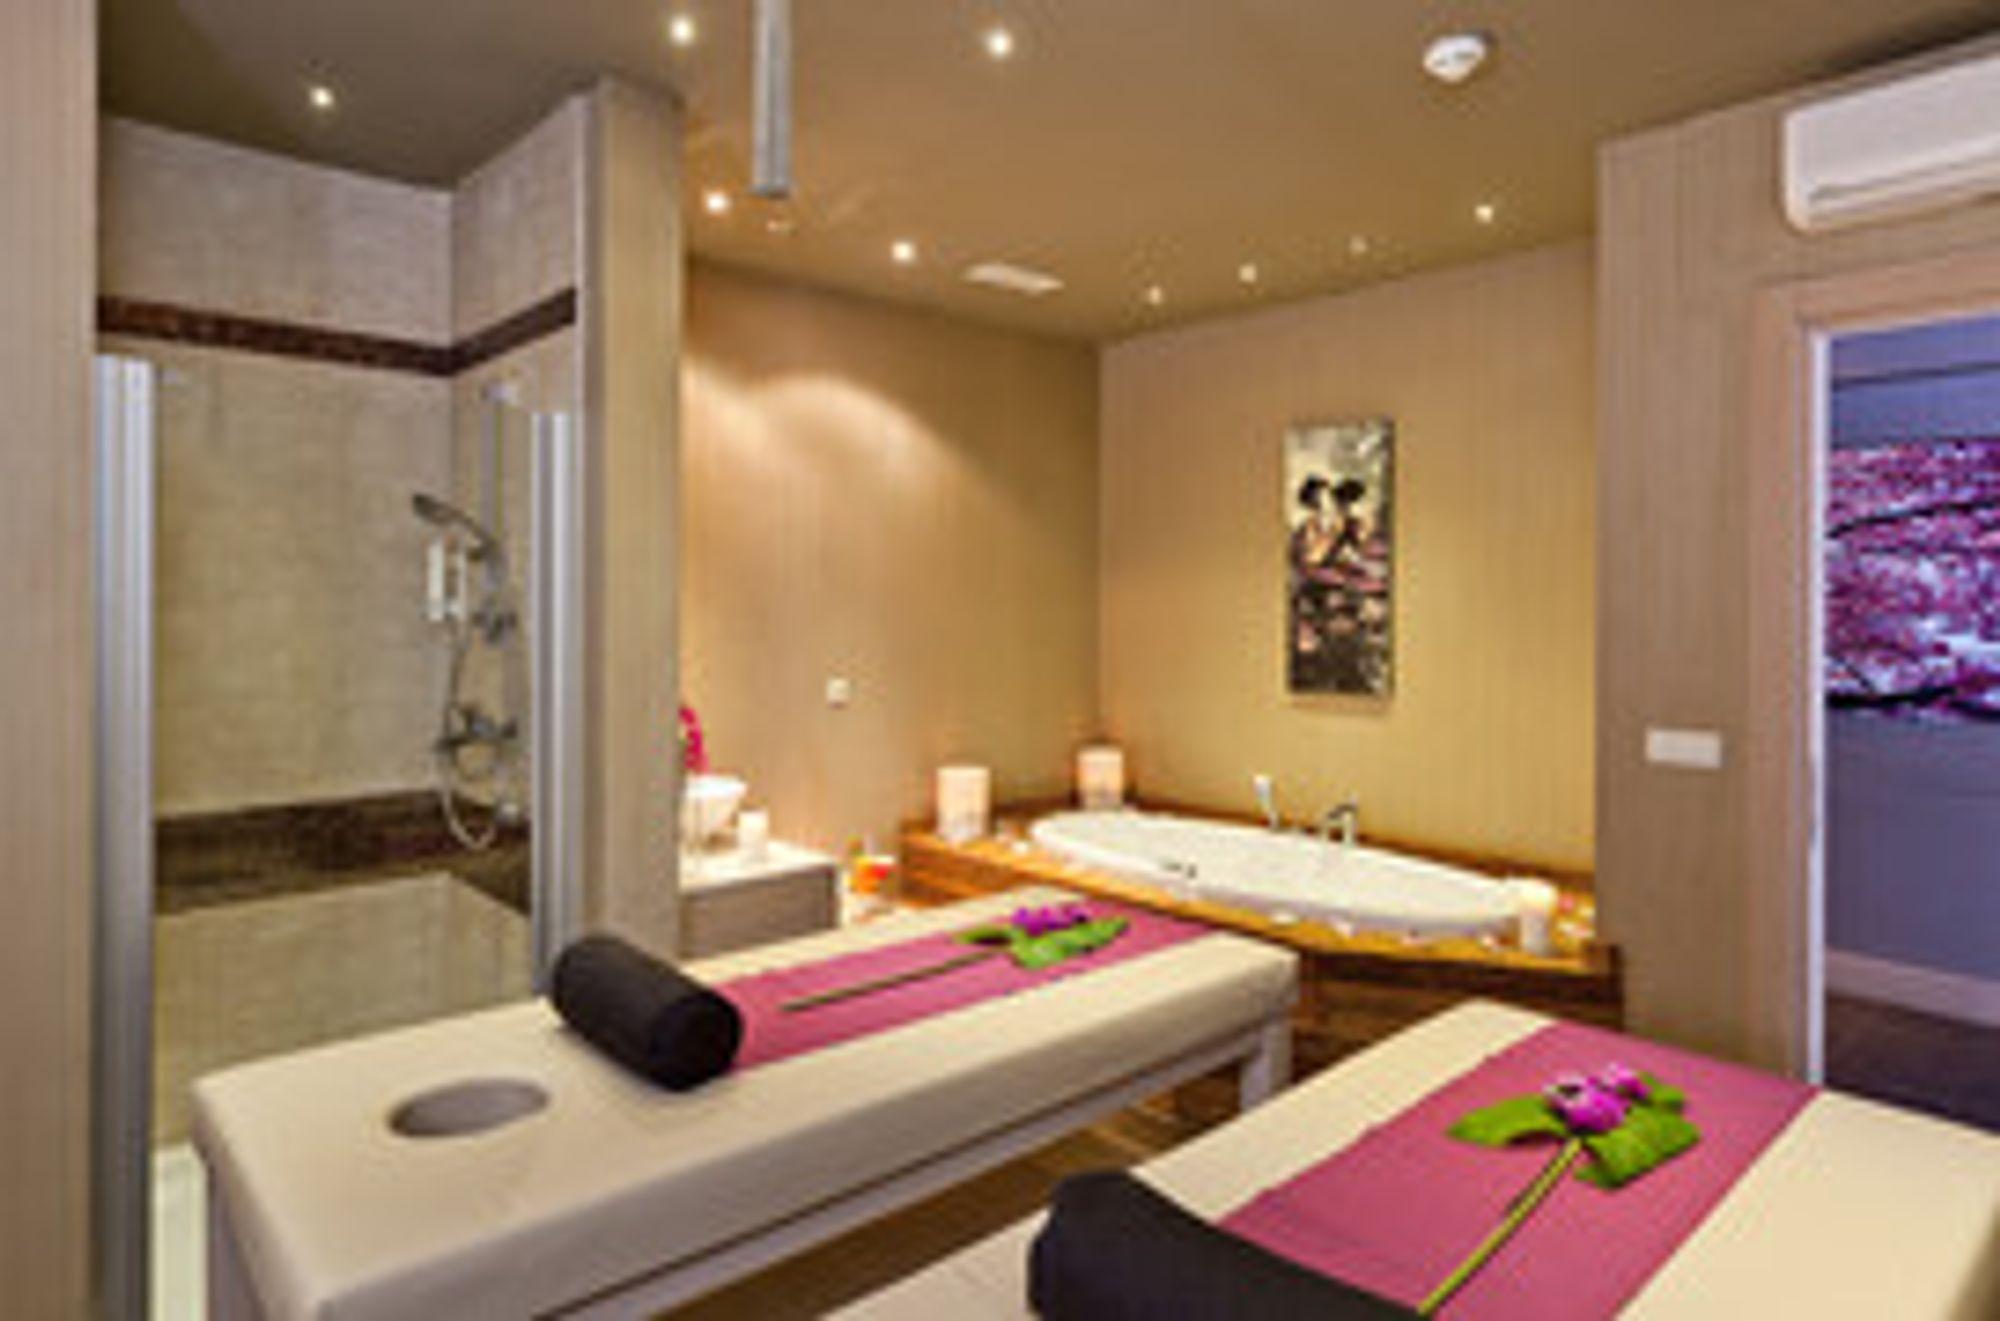 Limak Eurasia Luxury Hotel Istanboel Buitenkant foto